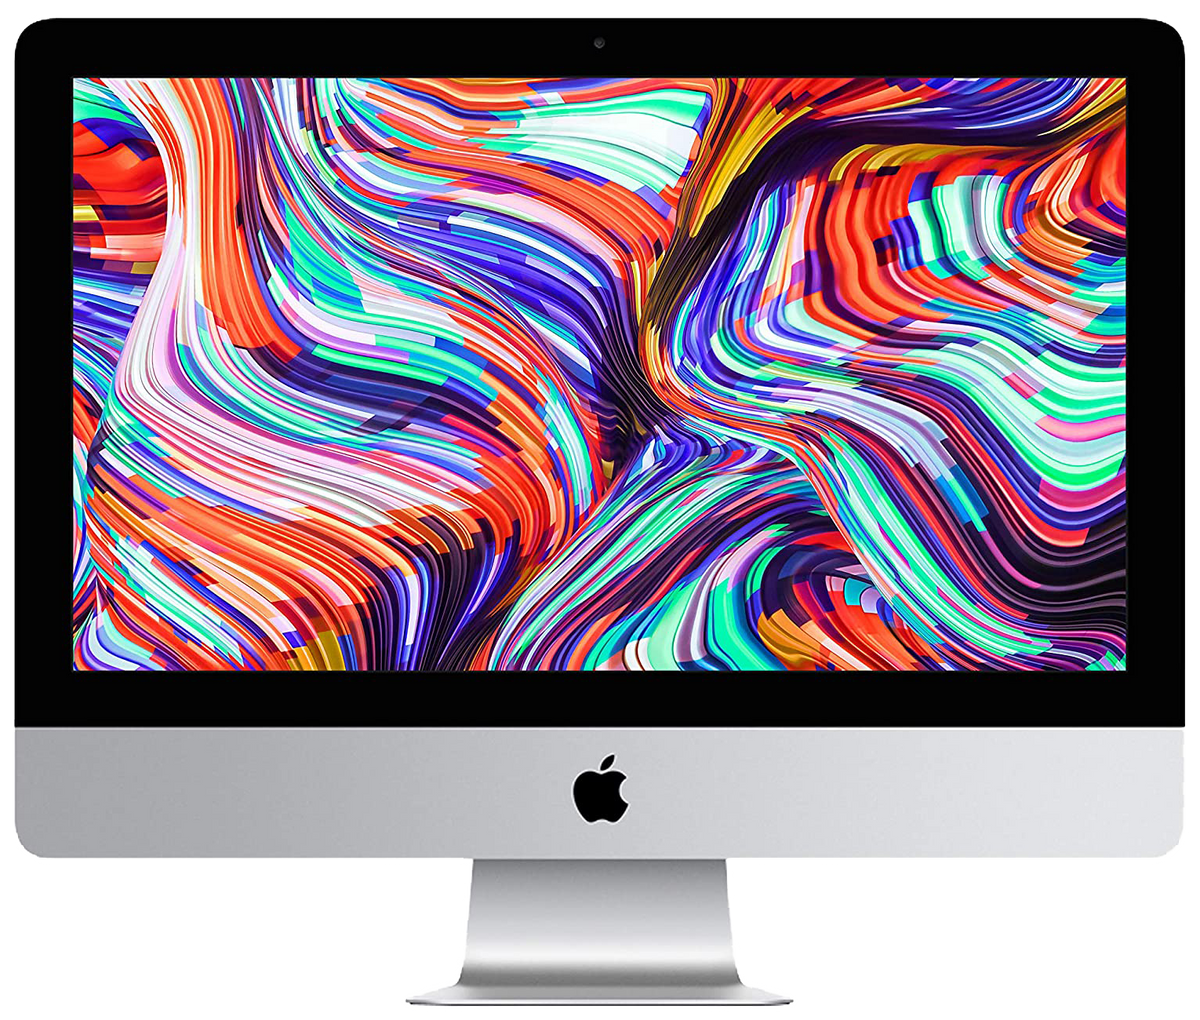 Apple iMac 21.5" 4k i7 16GB RAM 1TB HDD Radeon Pro 555X silber - Onhe Vertrag